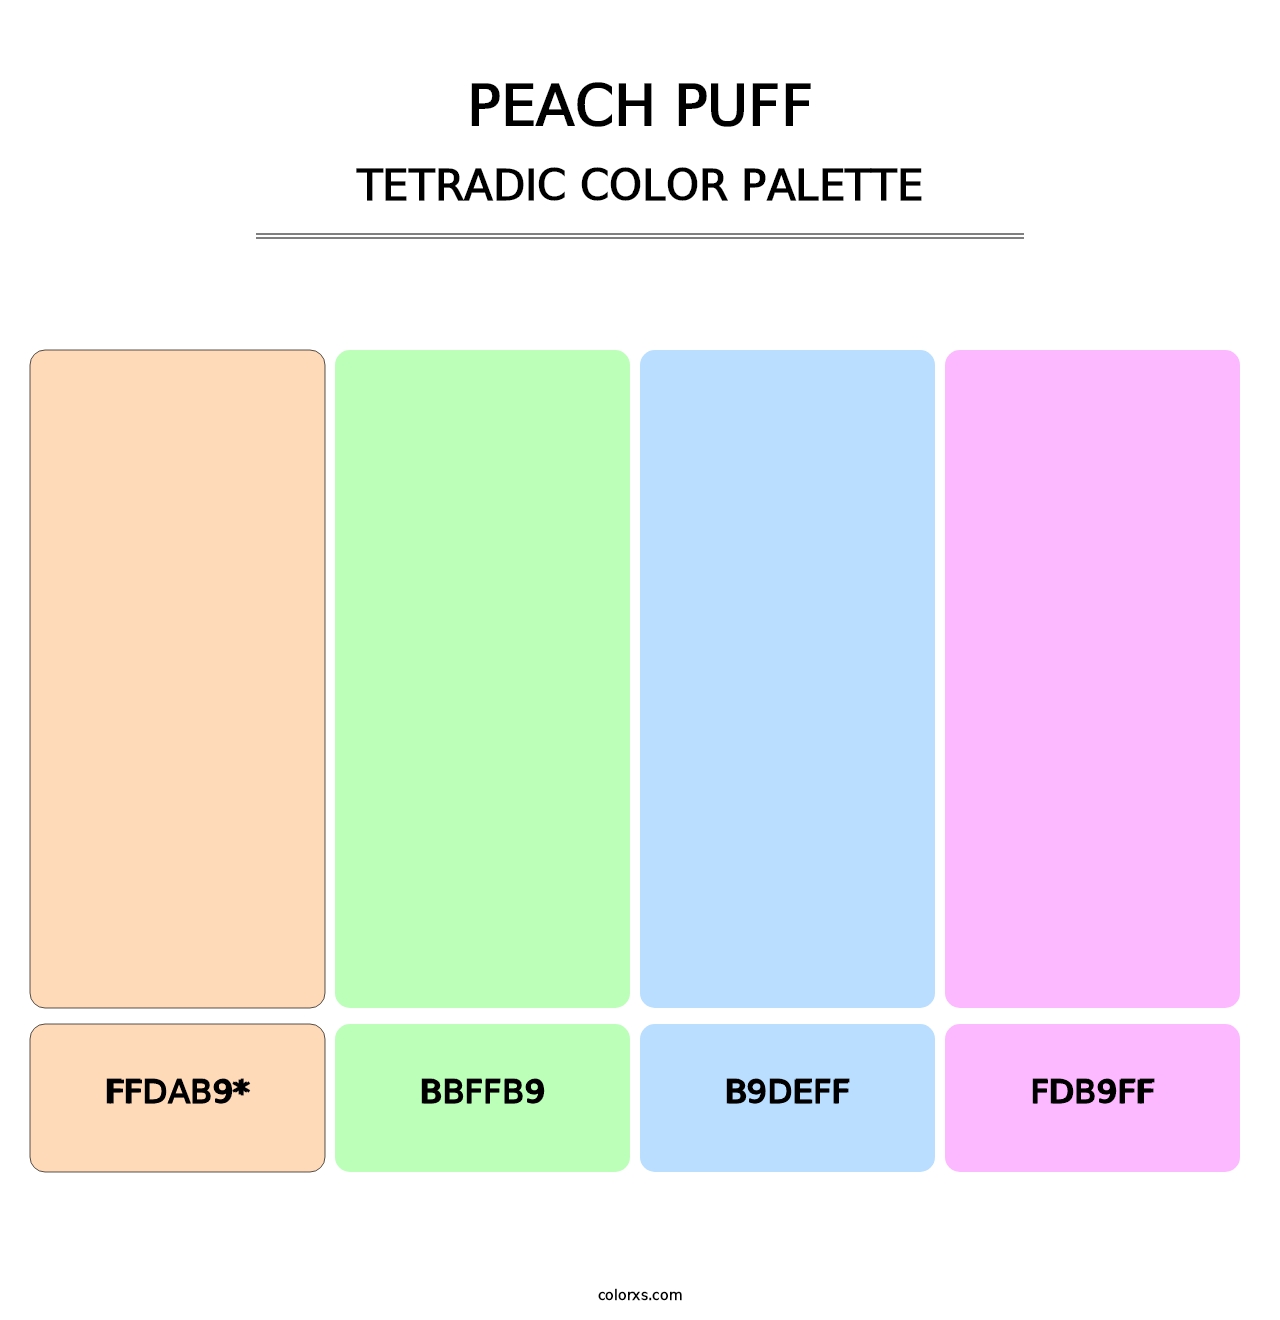 Peach Puff - Tetradic Color Palette